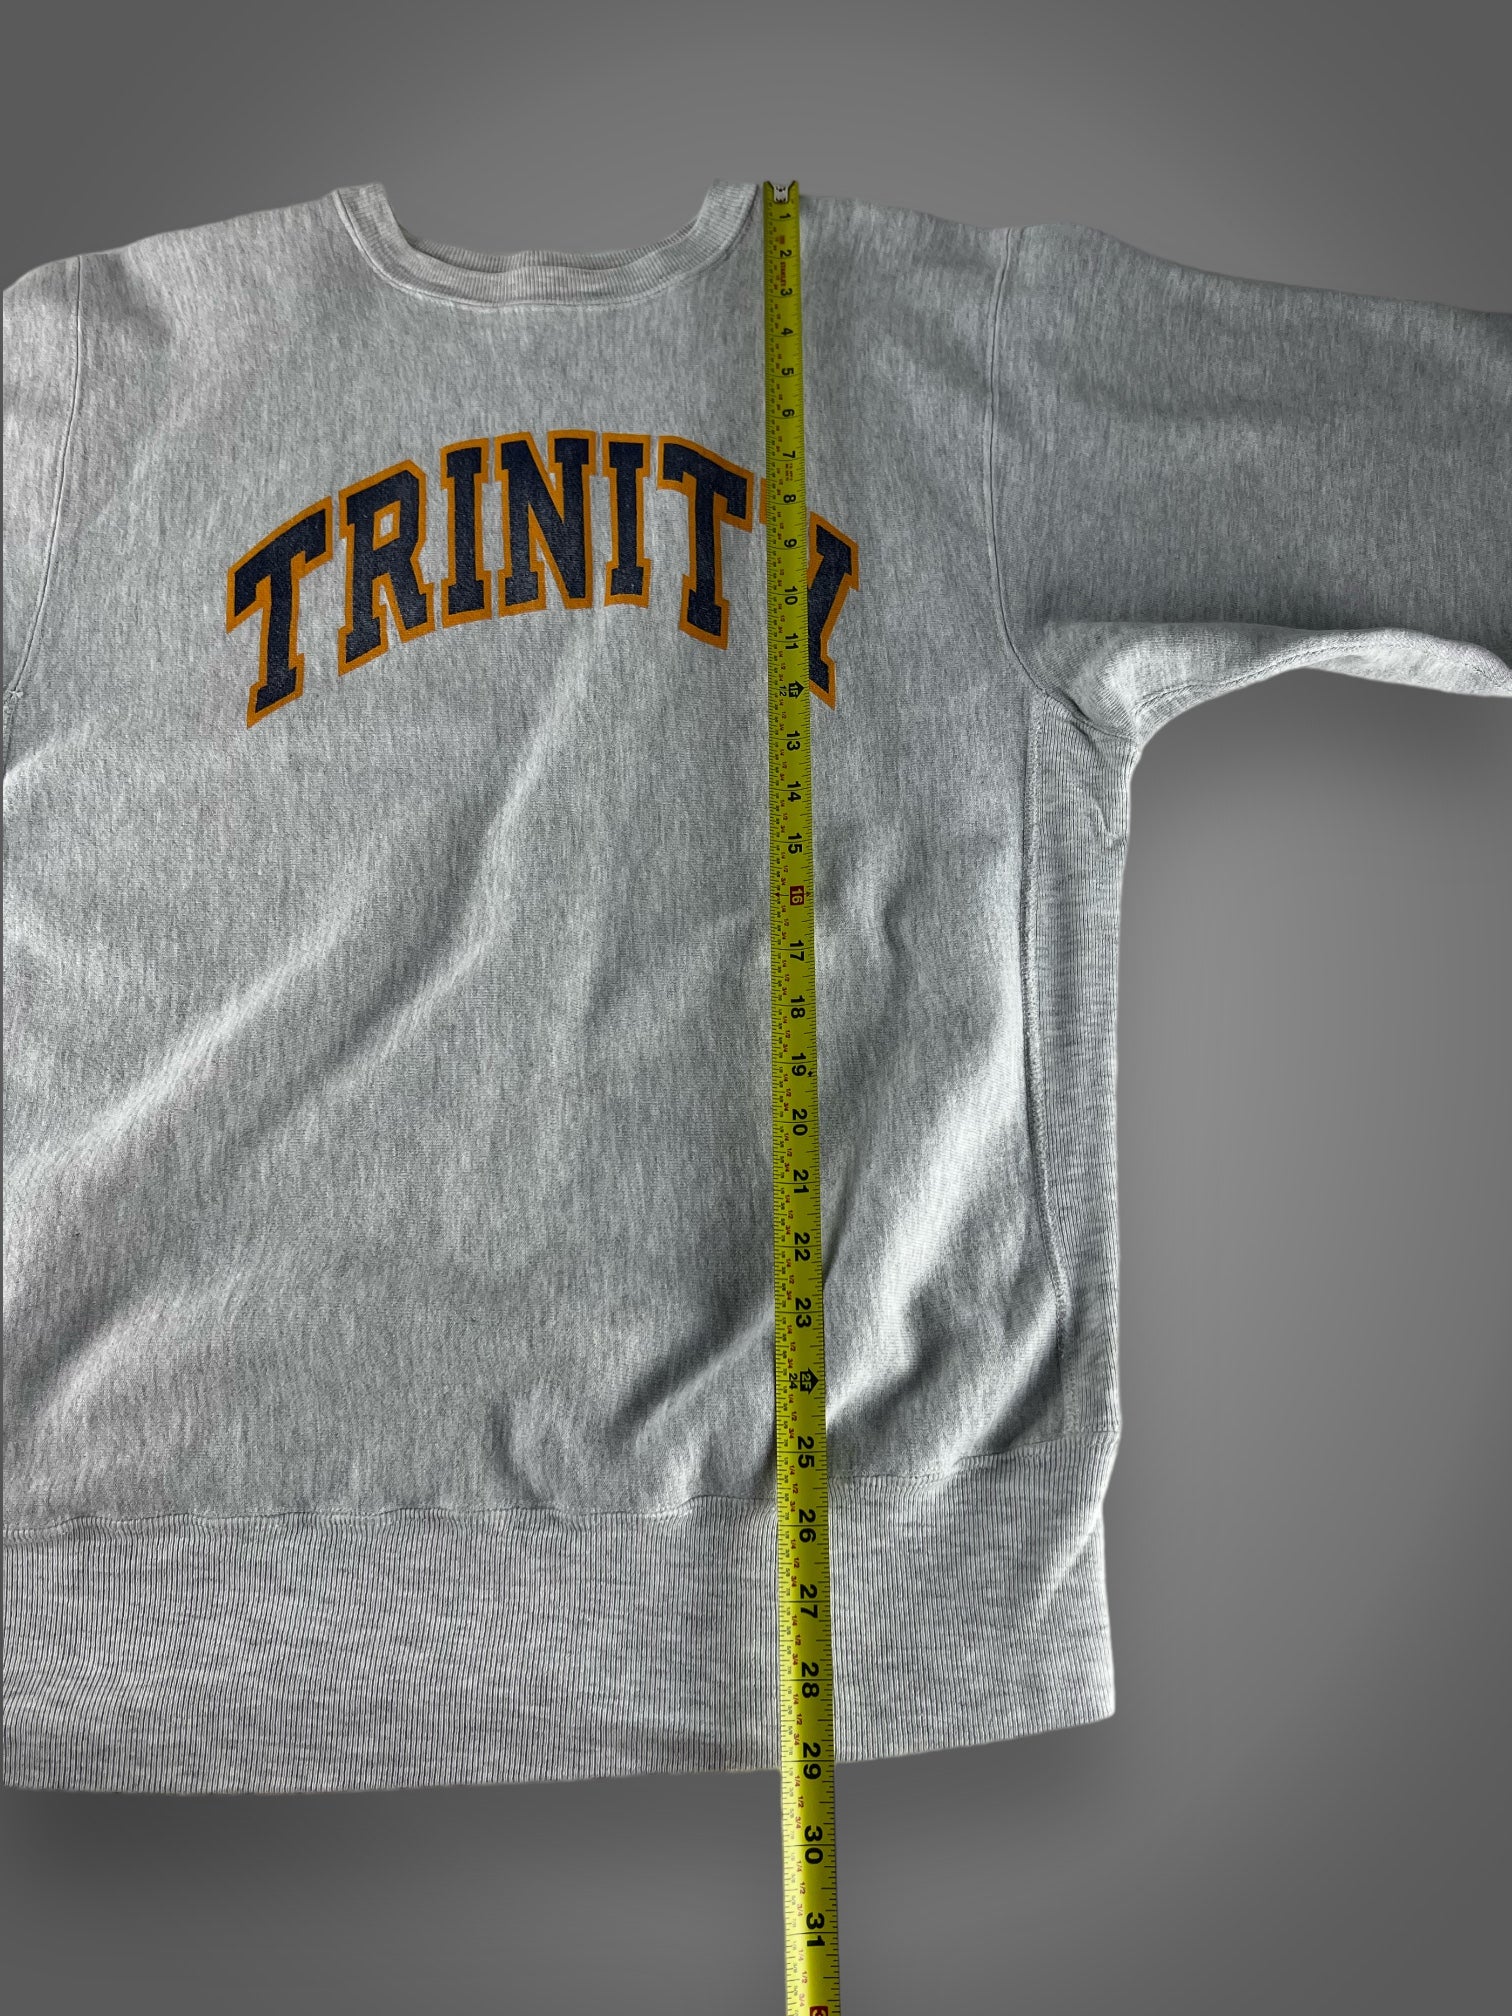 90s Champion Trinity reverse weave crewneck sweatshirt L